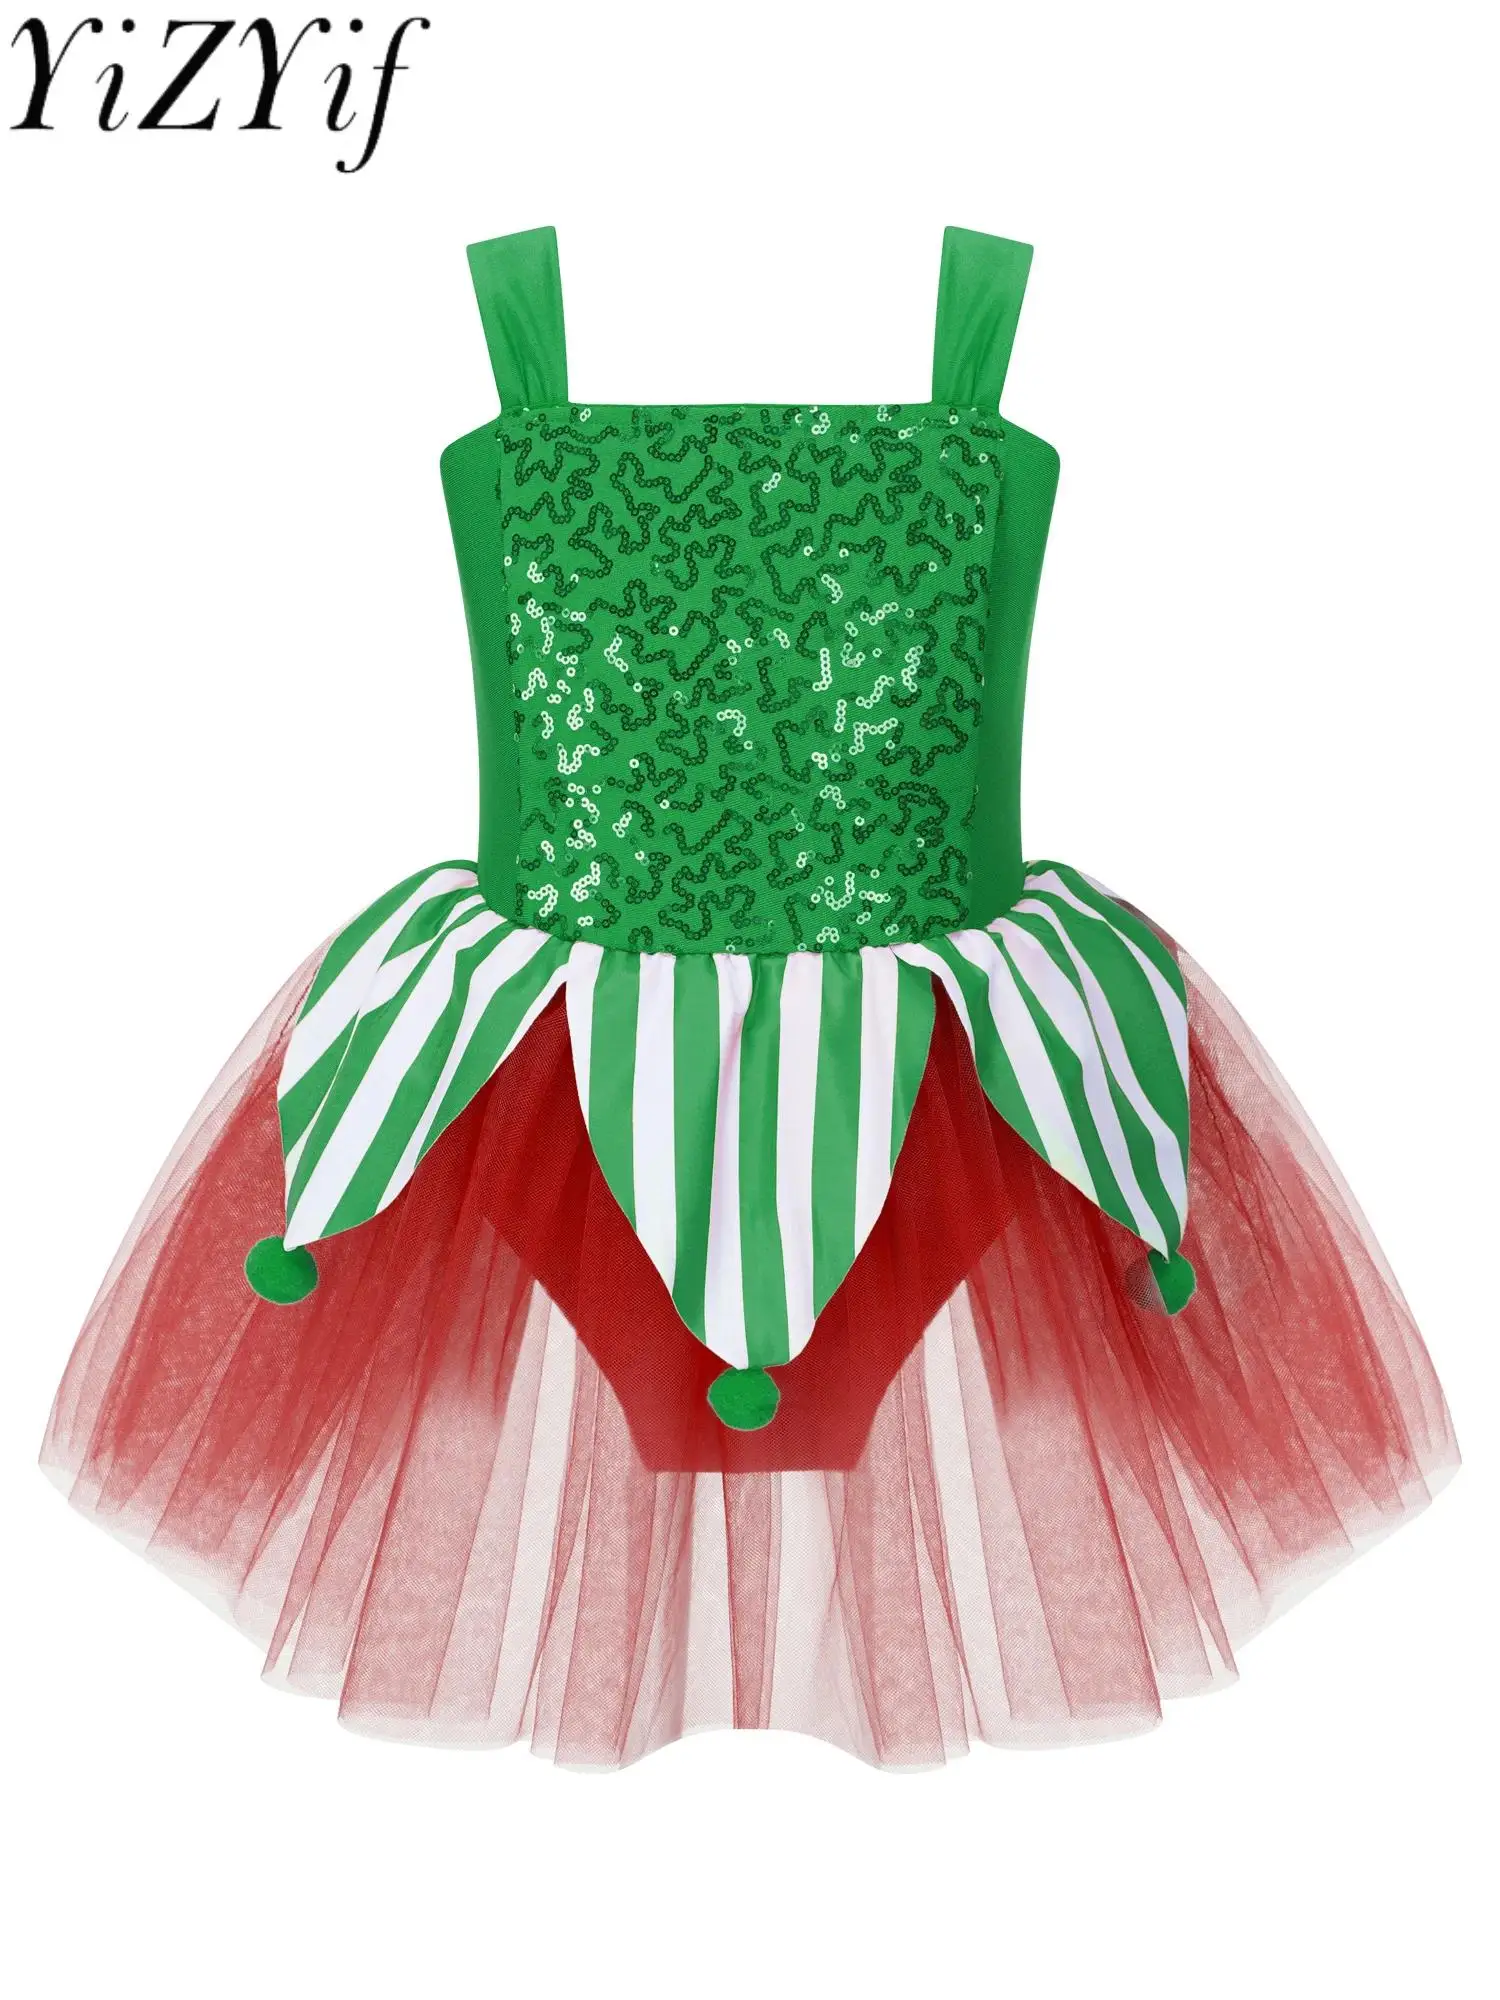 

Kids Girls Candy Cane Christmas Costume Xmas Elf Party Cosplay Dress Sequin Striped Figure Skating Ballet Dance Leotard Tutu